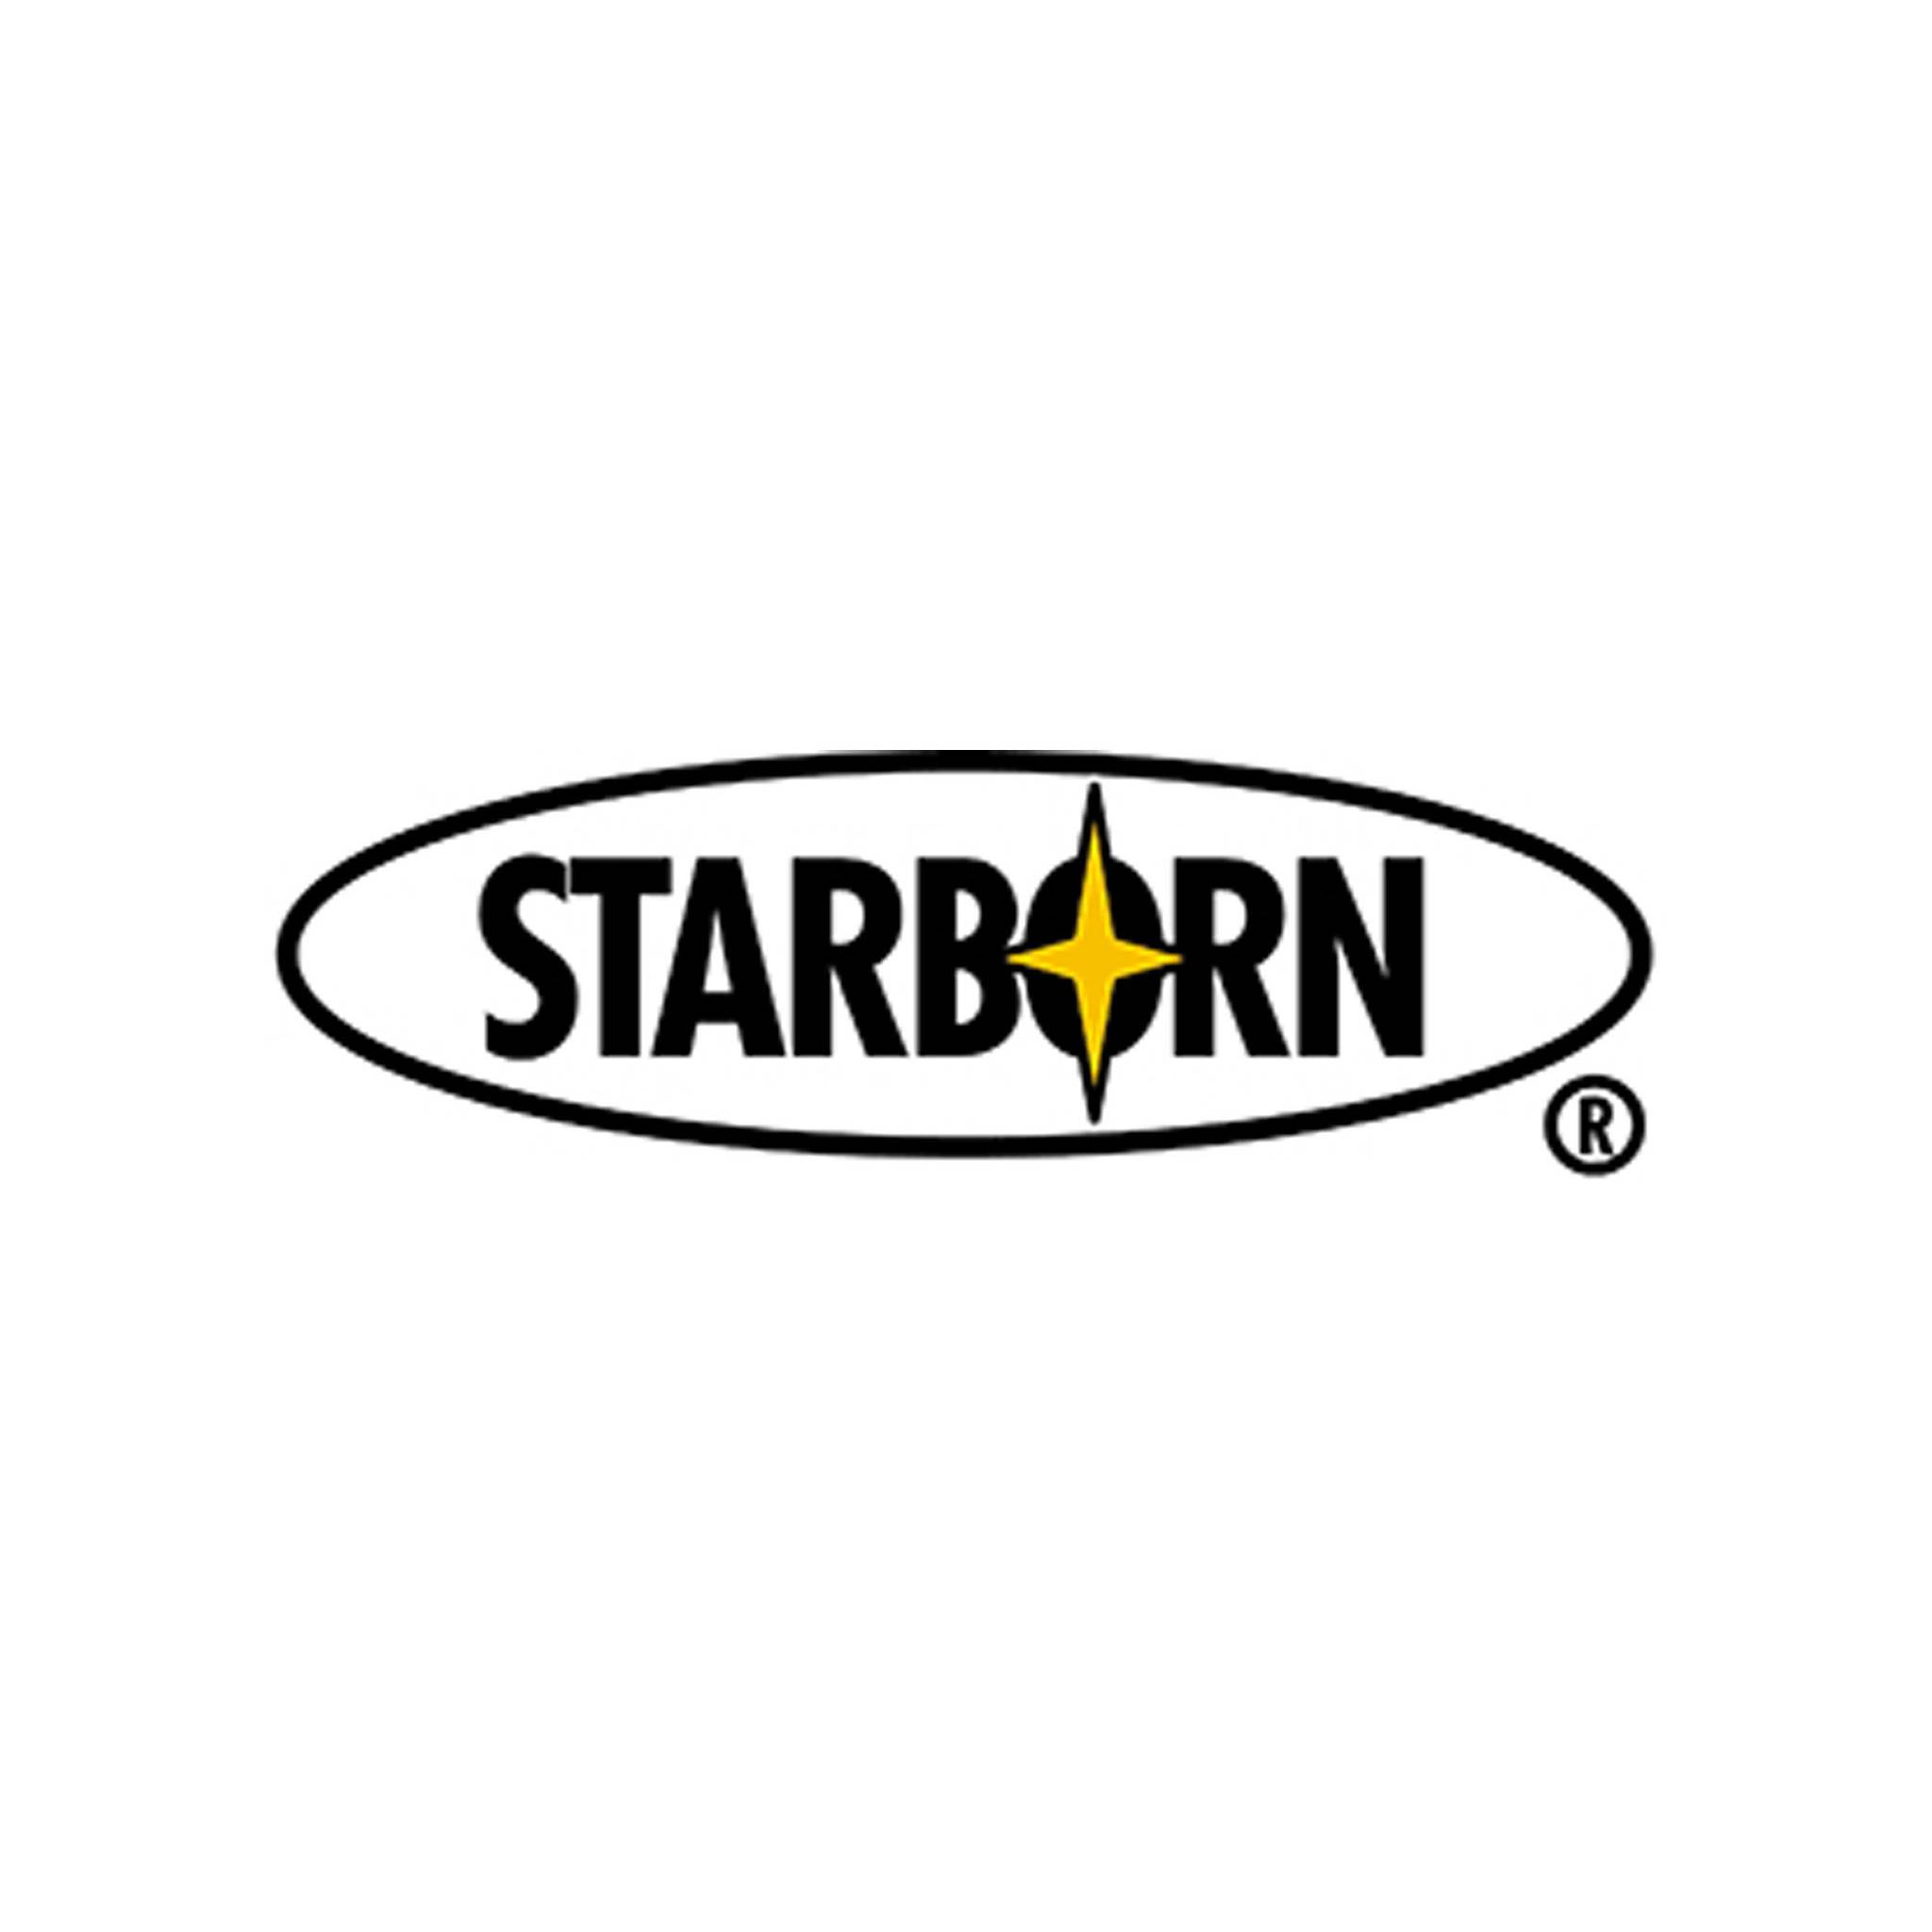 STARBORN logo